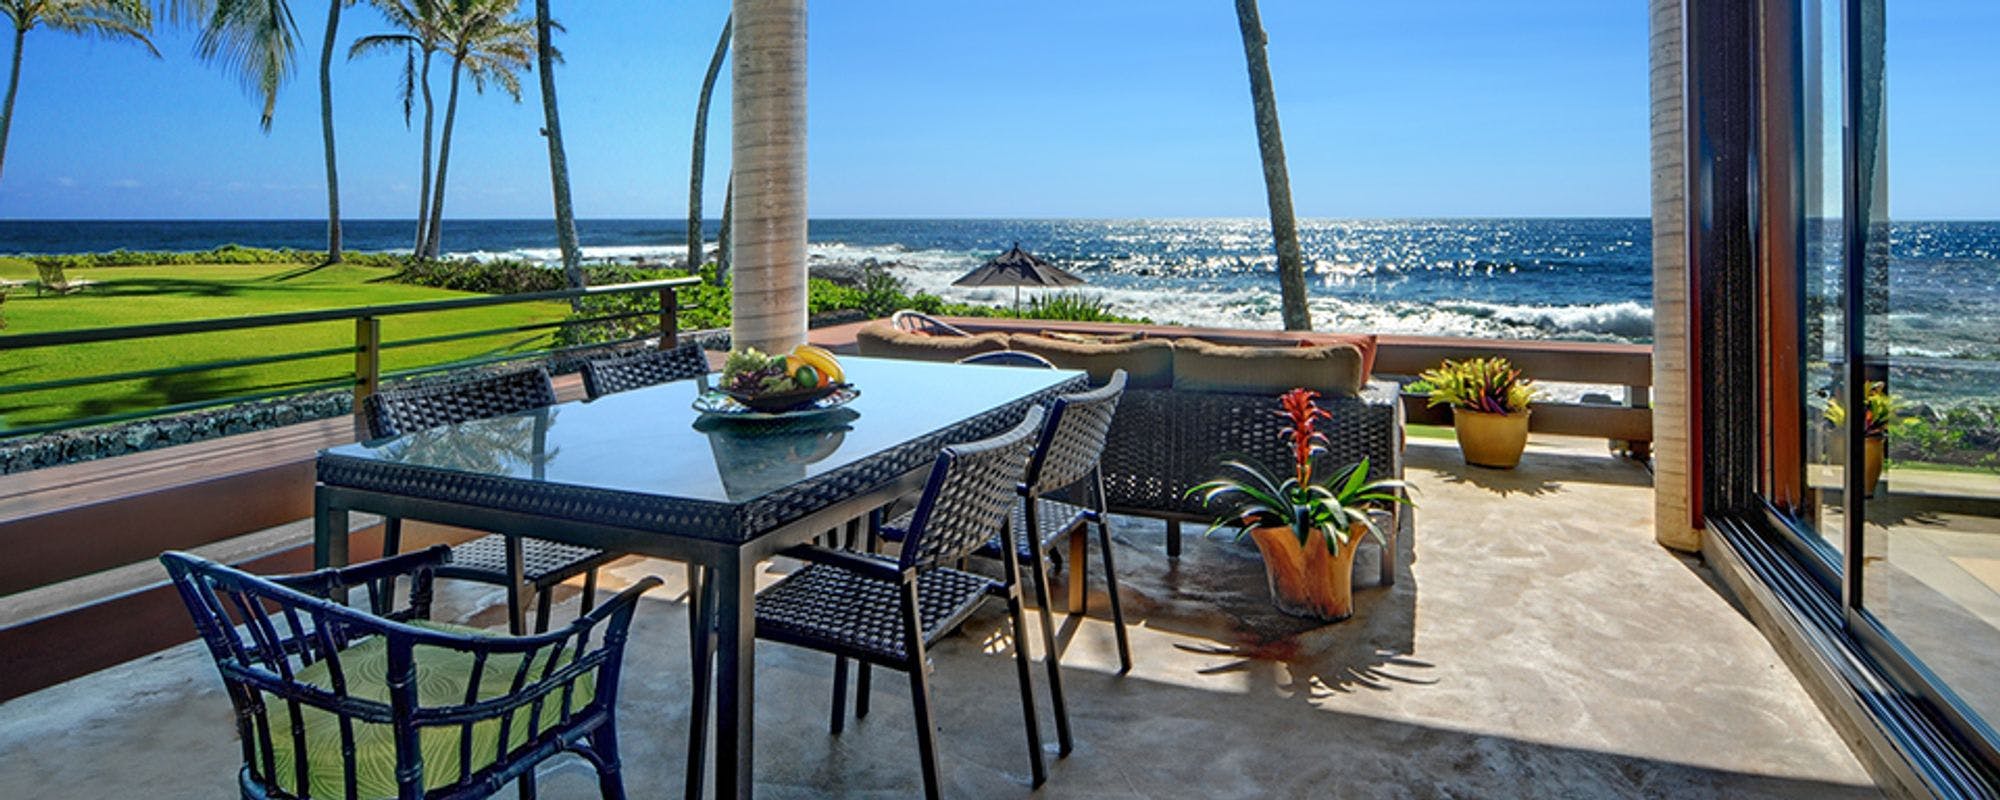 Outdoor dining with ocean views at Kauai vacation rental